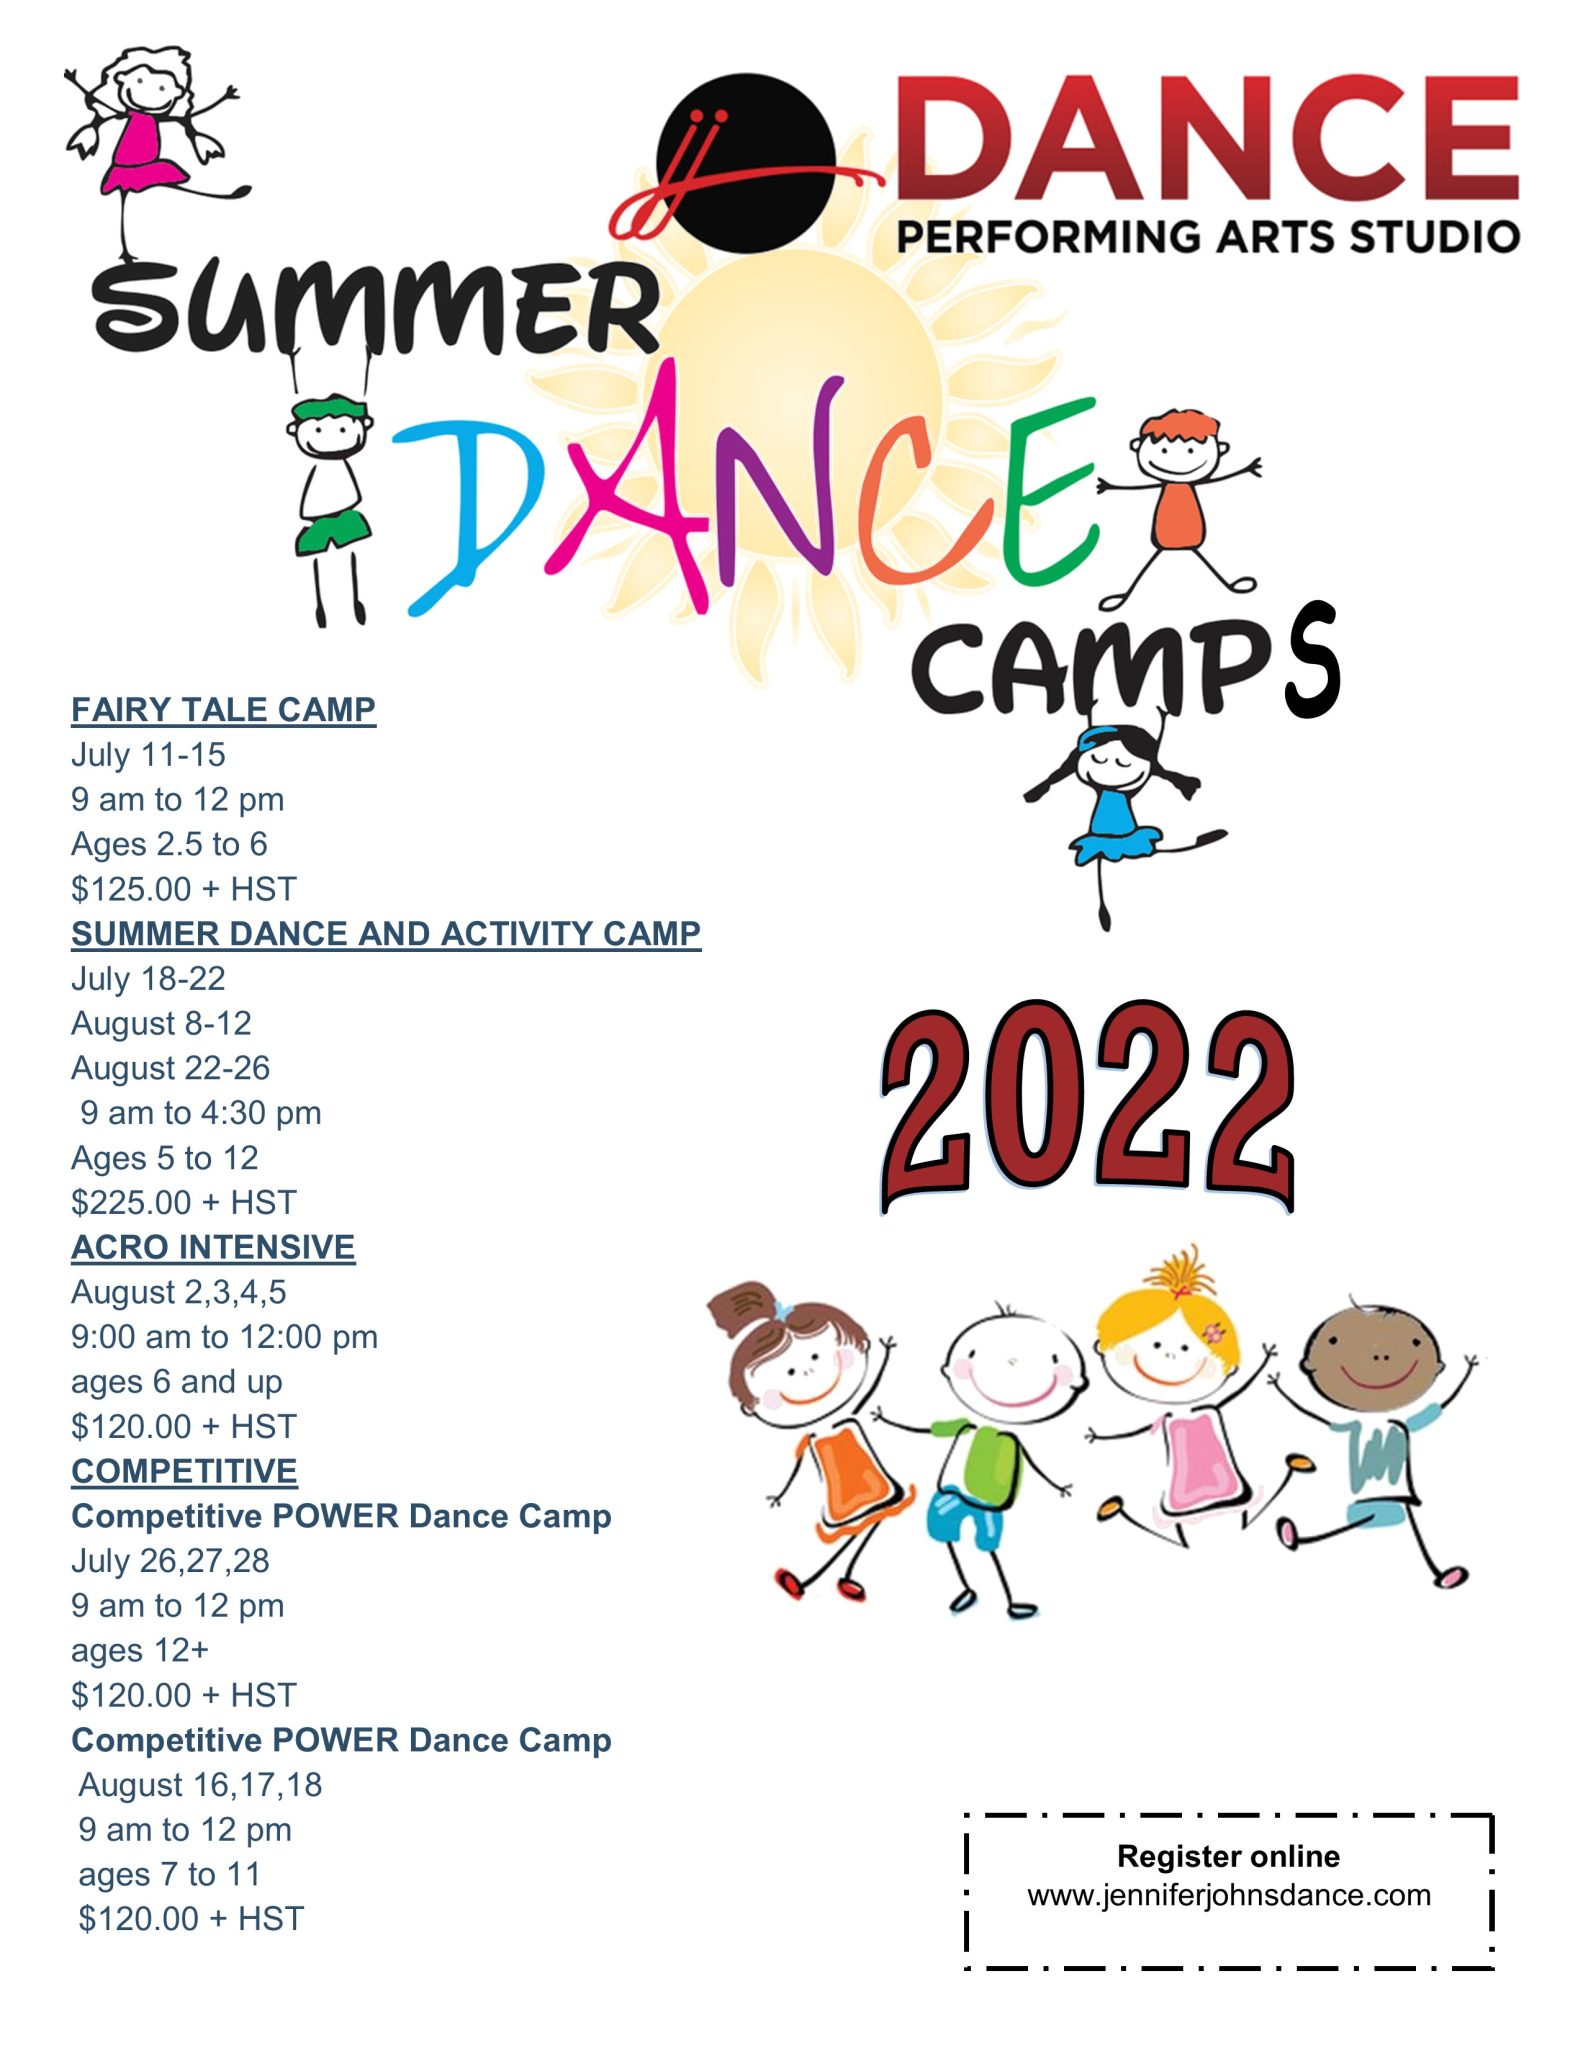 Summer Dance Camps JJ DANCE Performing Arts Studio